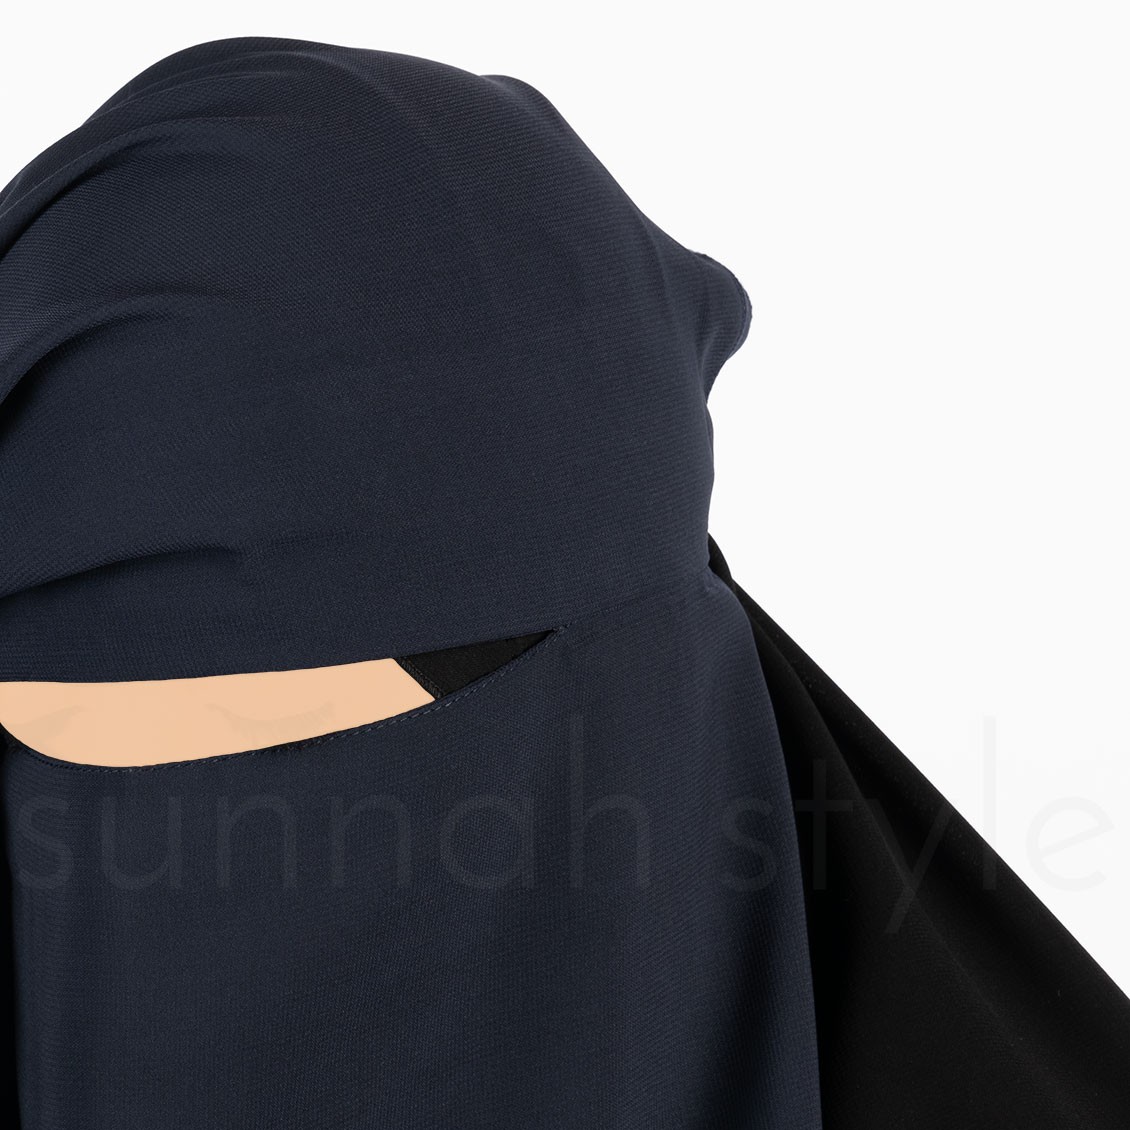 Sunnah Style Long Three Layer Niqab Navy Blue